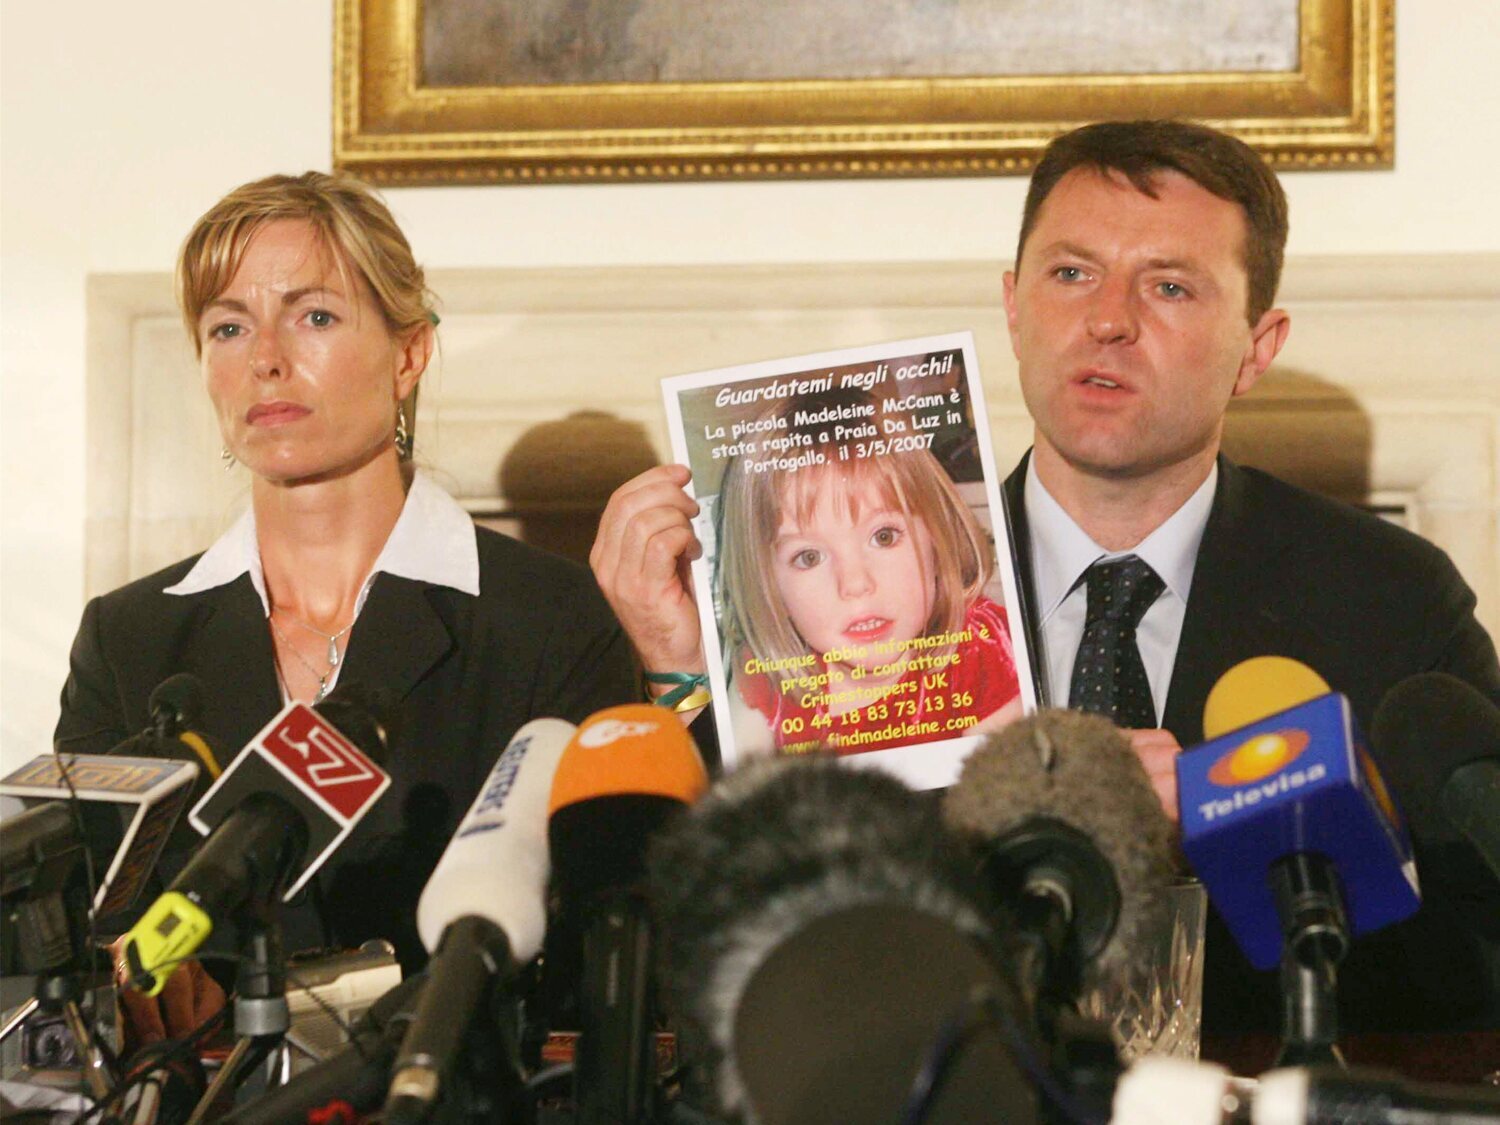 Los padres de Madeleine McCann se pronuncian tras la prueba de ADN negativa de Julia Faustyna